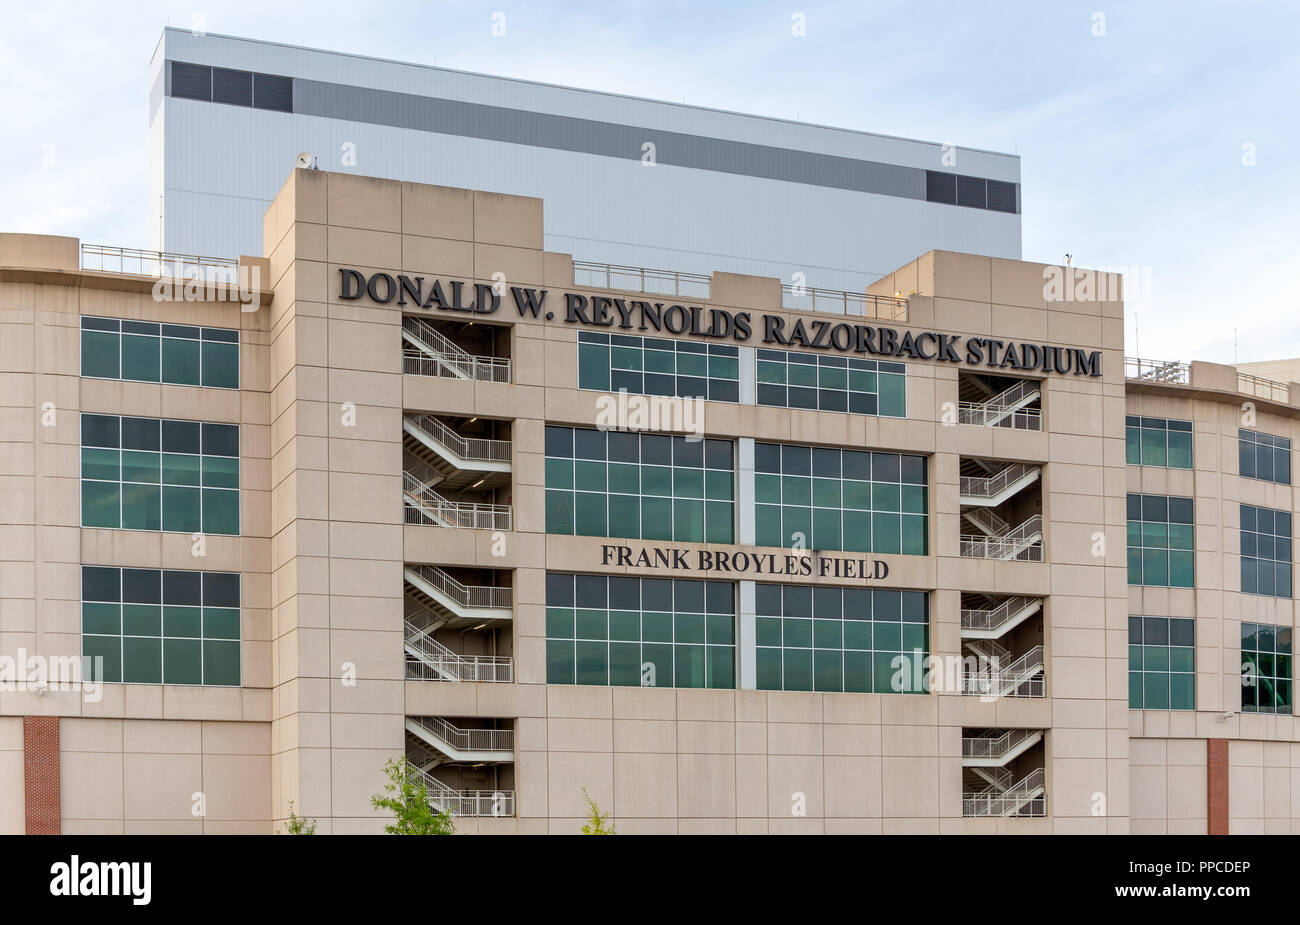 FAYETTEVILLE, AR/USA - Juni 7, 2018: Donald W. Reynolds Razorback Stadion und Frank Broyles Feld. Stockfoto